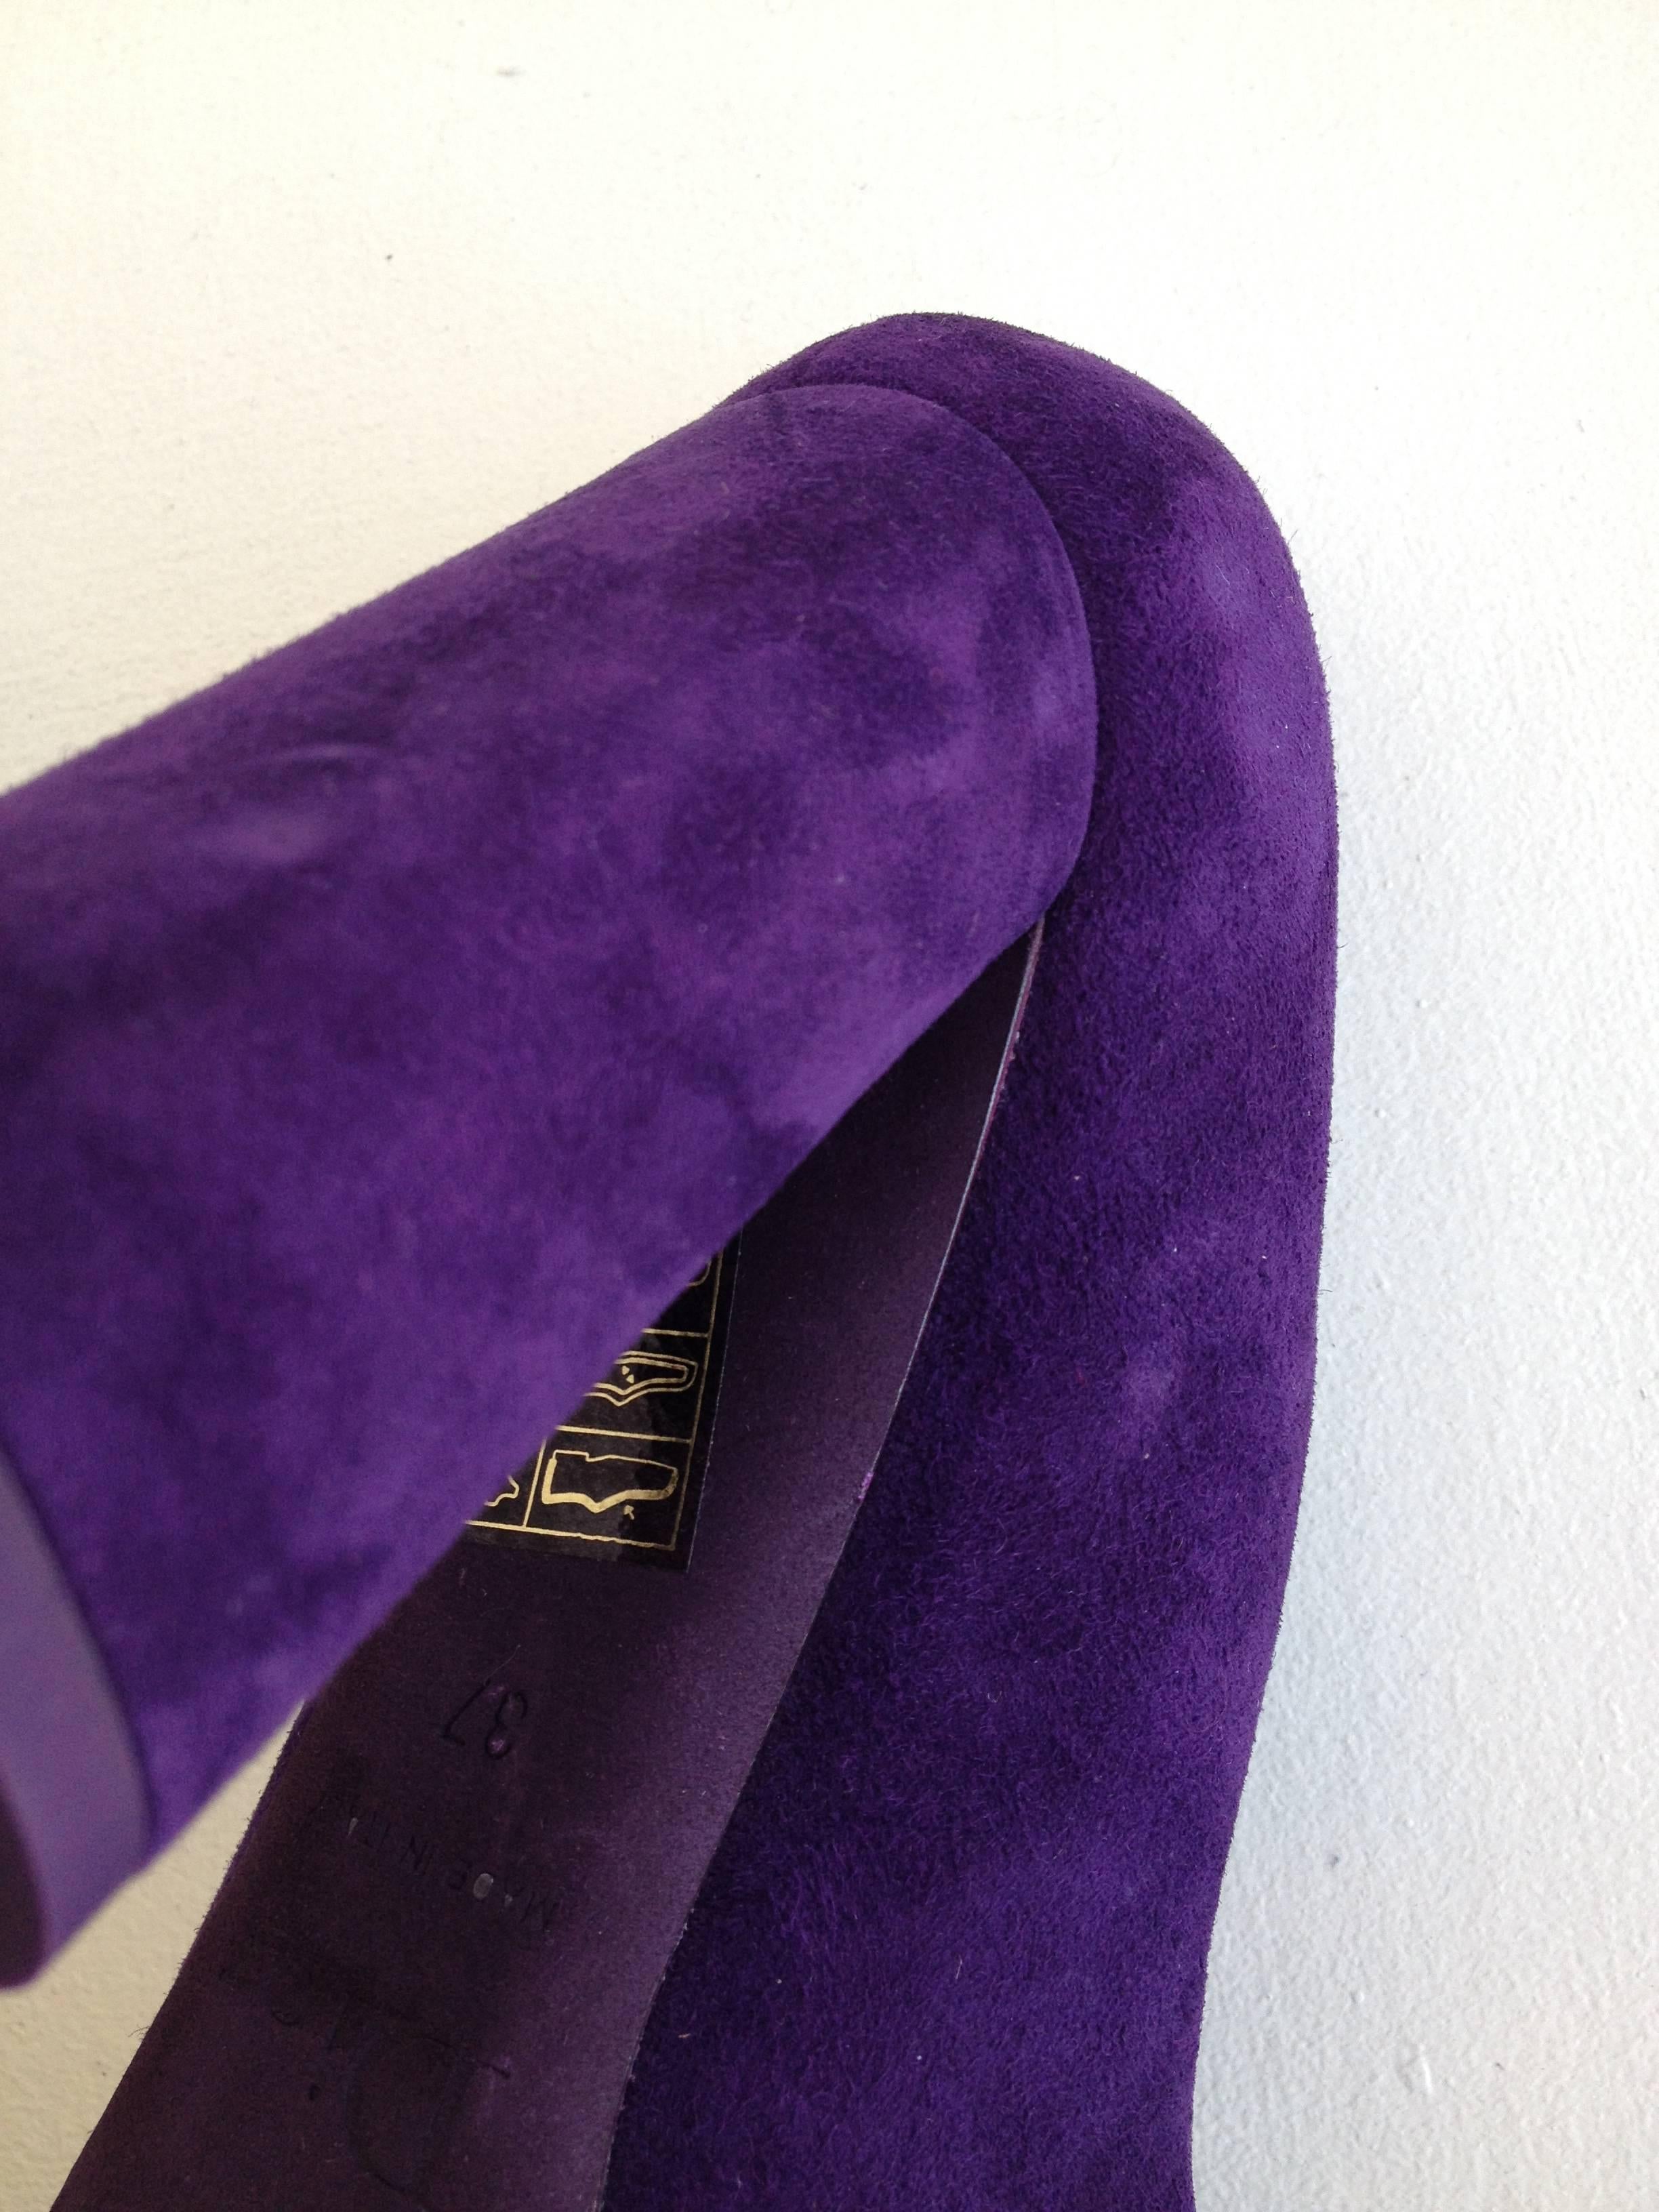 Christian Dior Purple Suede Block Heeled Pumps Size 37 (6.5) 1